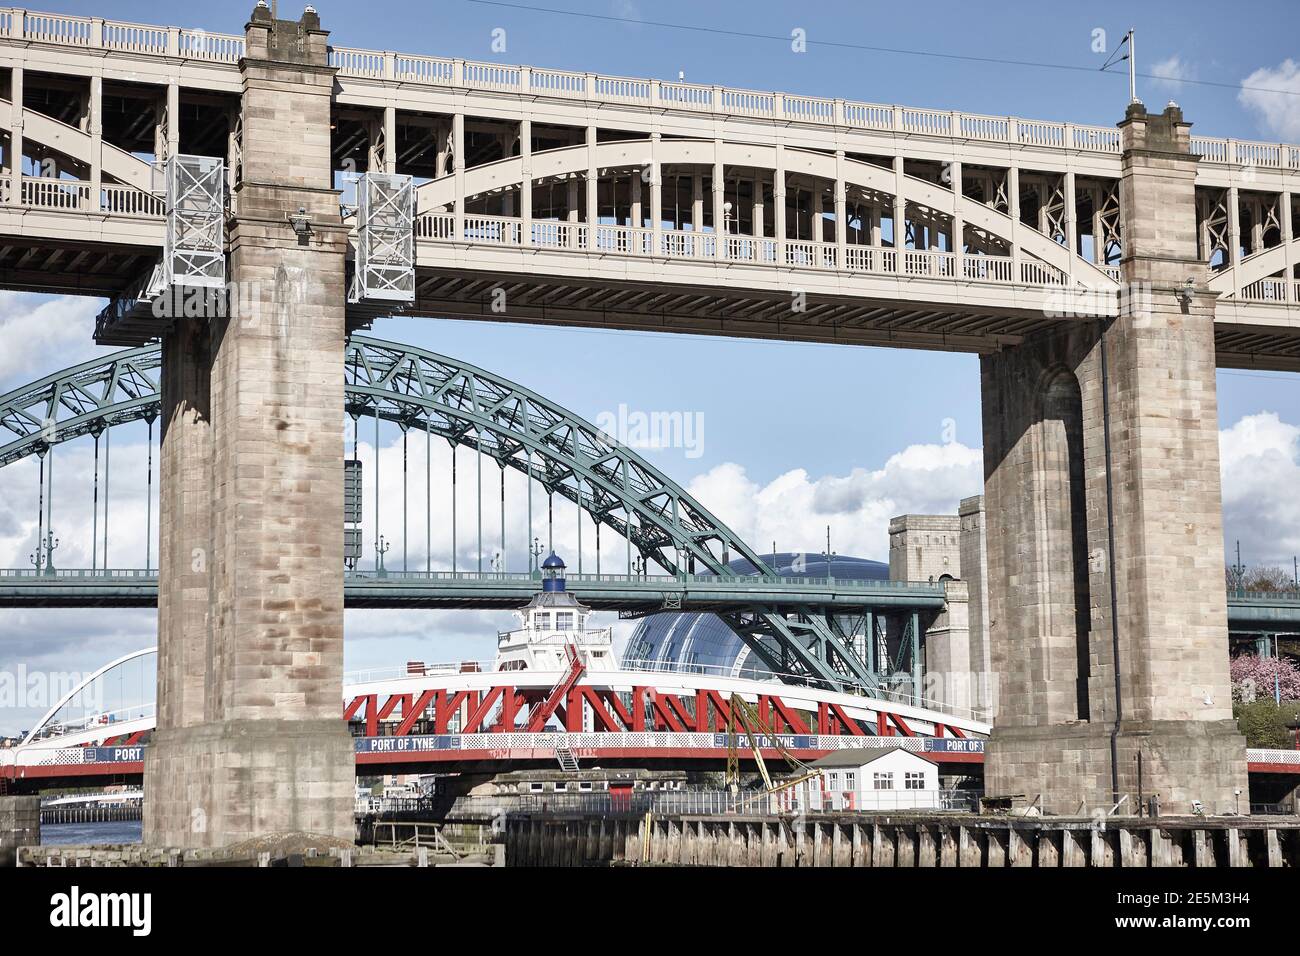 High Level Bridge, Newcastle upon Tyne, Tyneside, nord-est de l'Angleterre, Royaume-Uni Banque D'Images